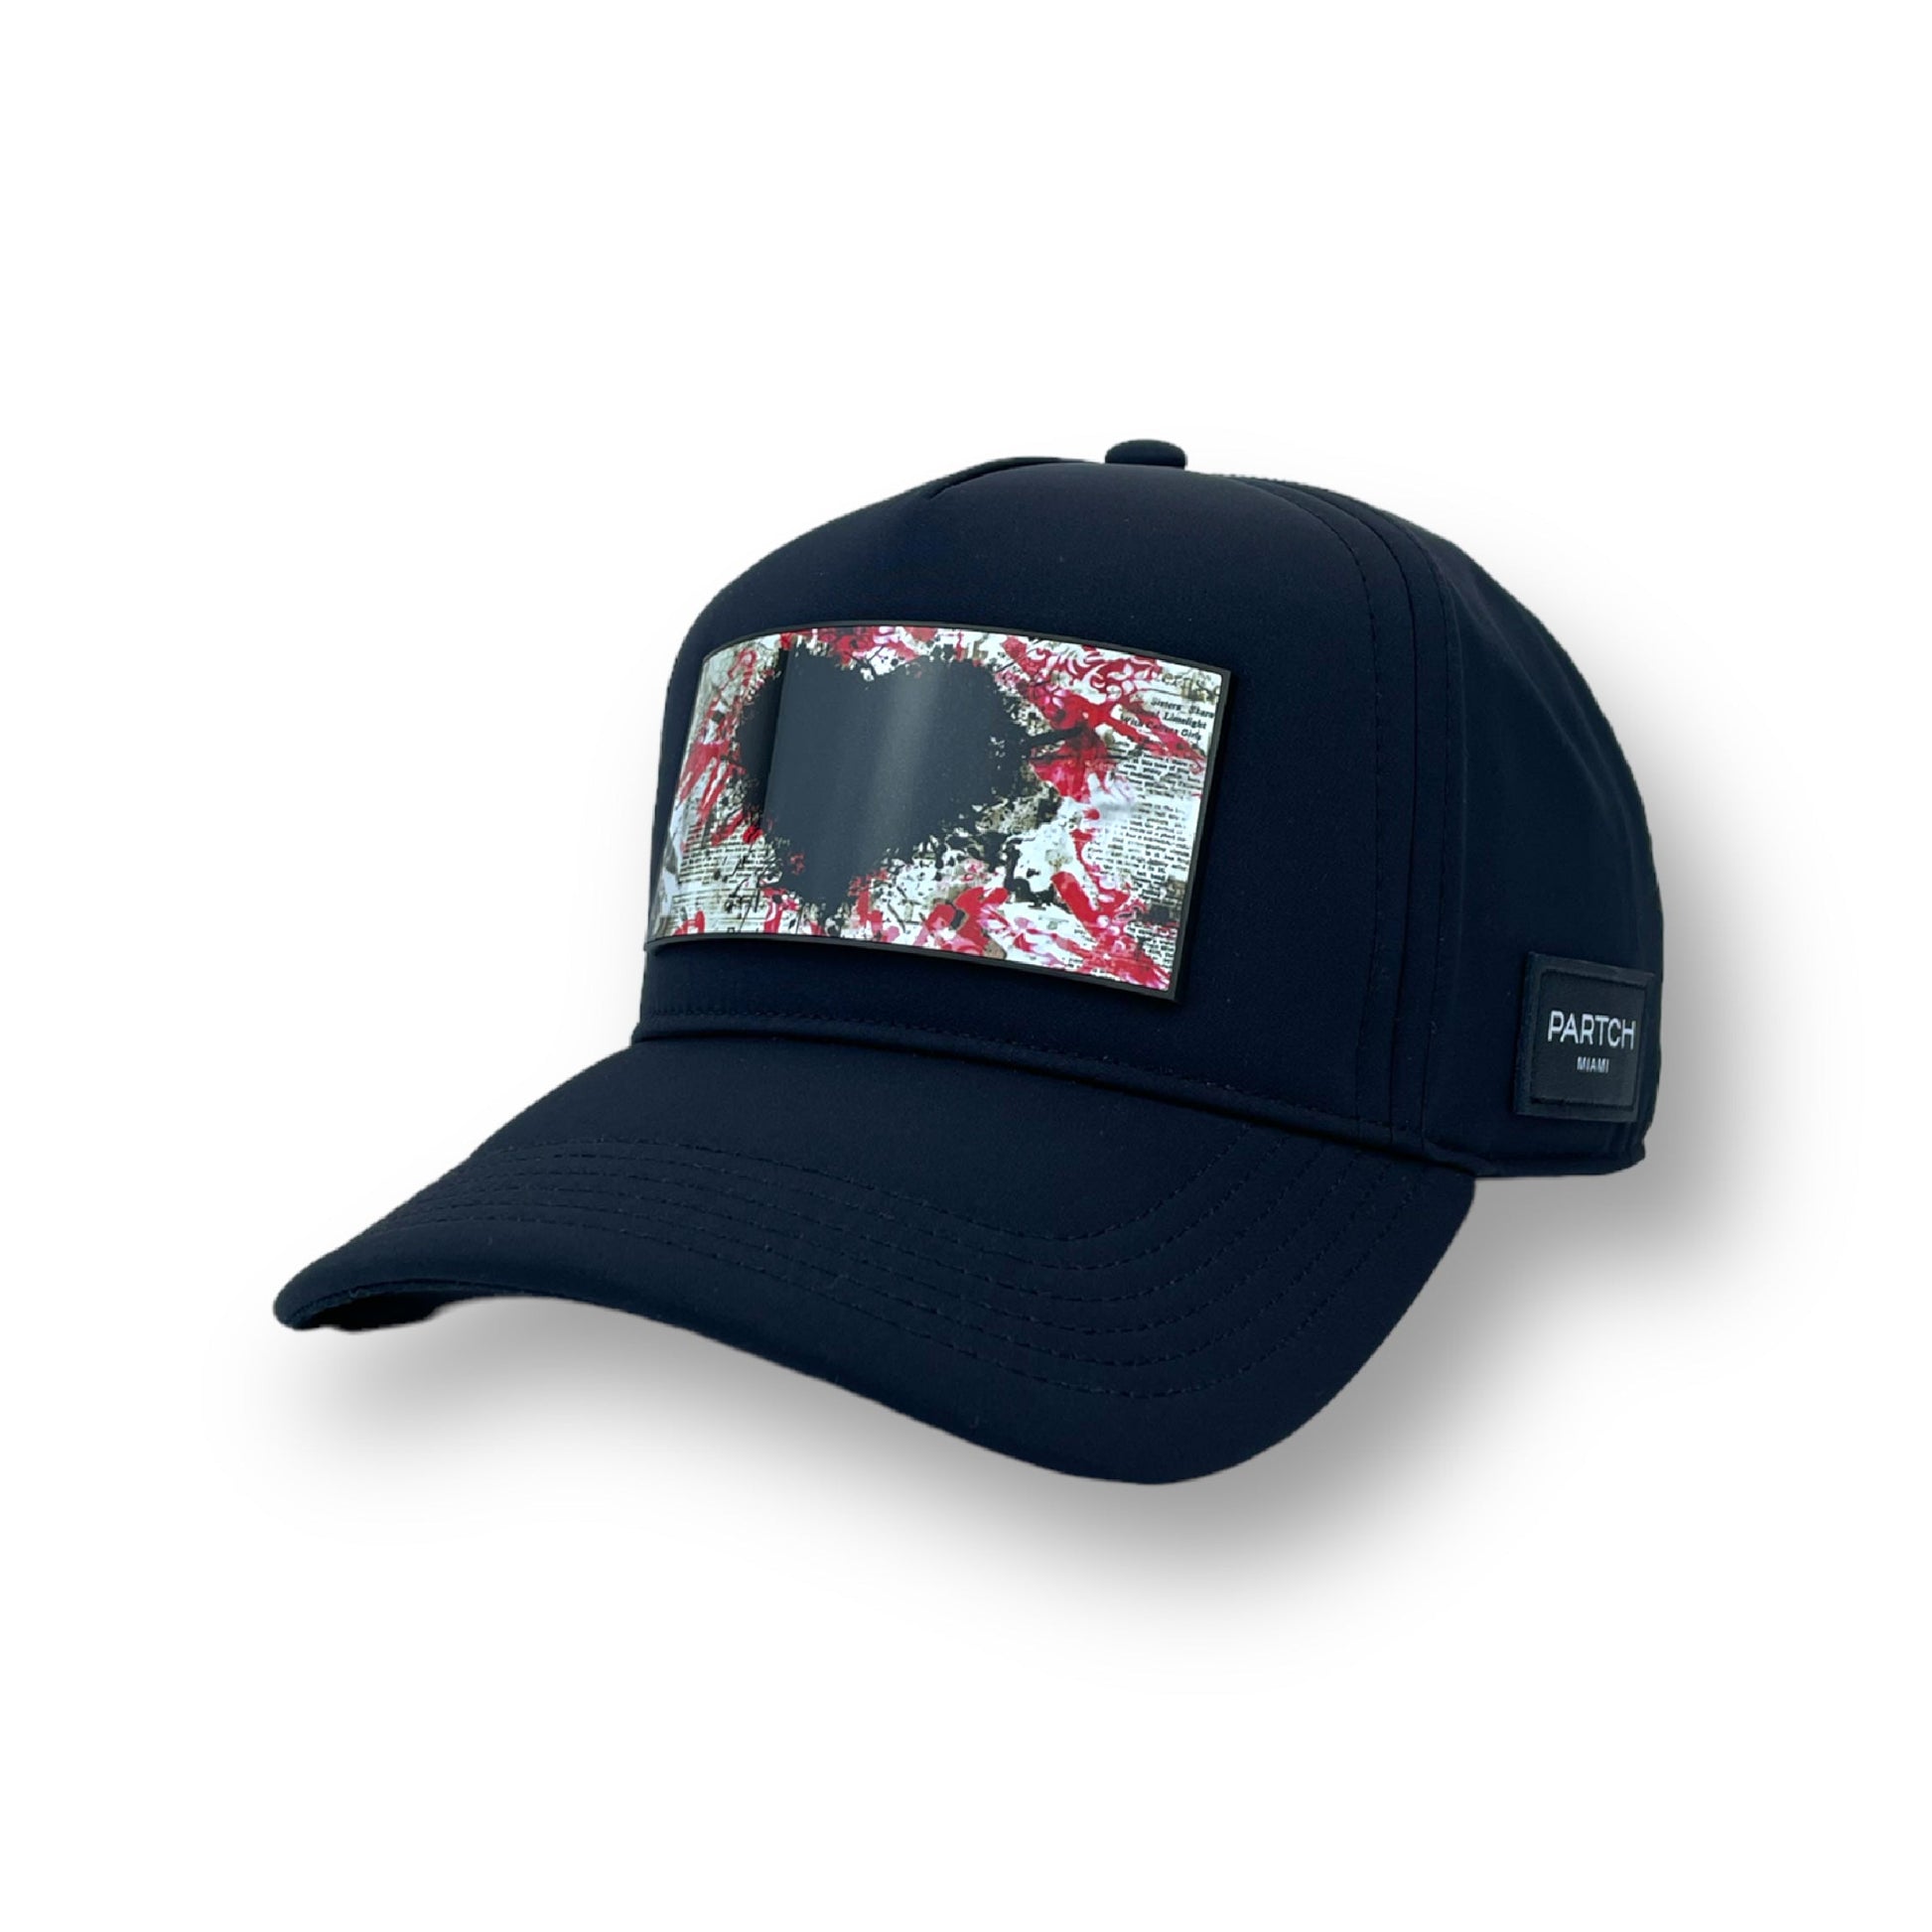 Luxury Fashion Black Trucker Hat with Art Inspyr Heart Front Partch Clip Interchangeable | PARTCH